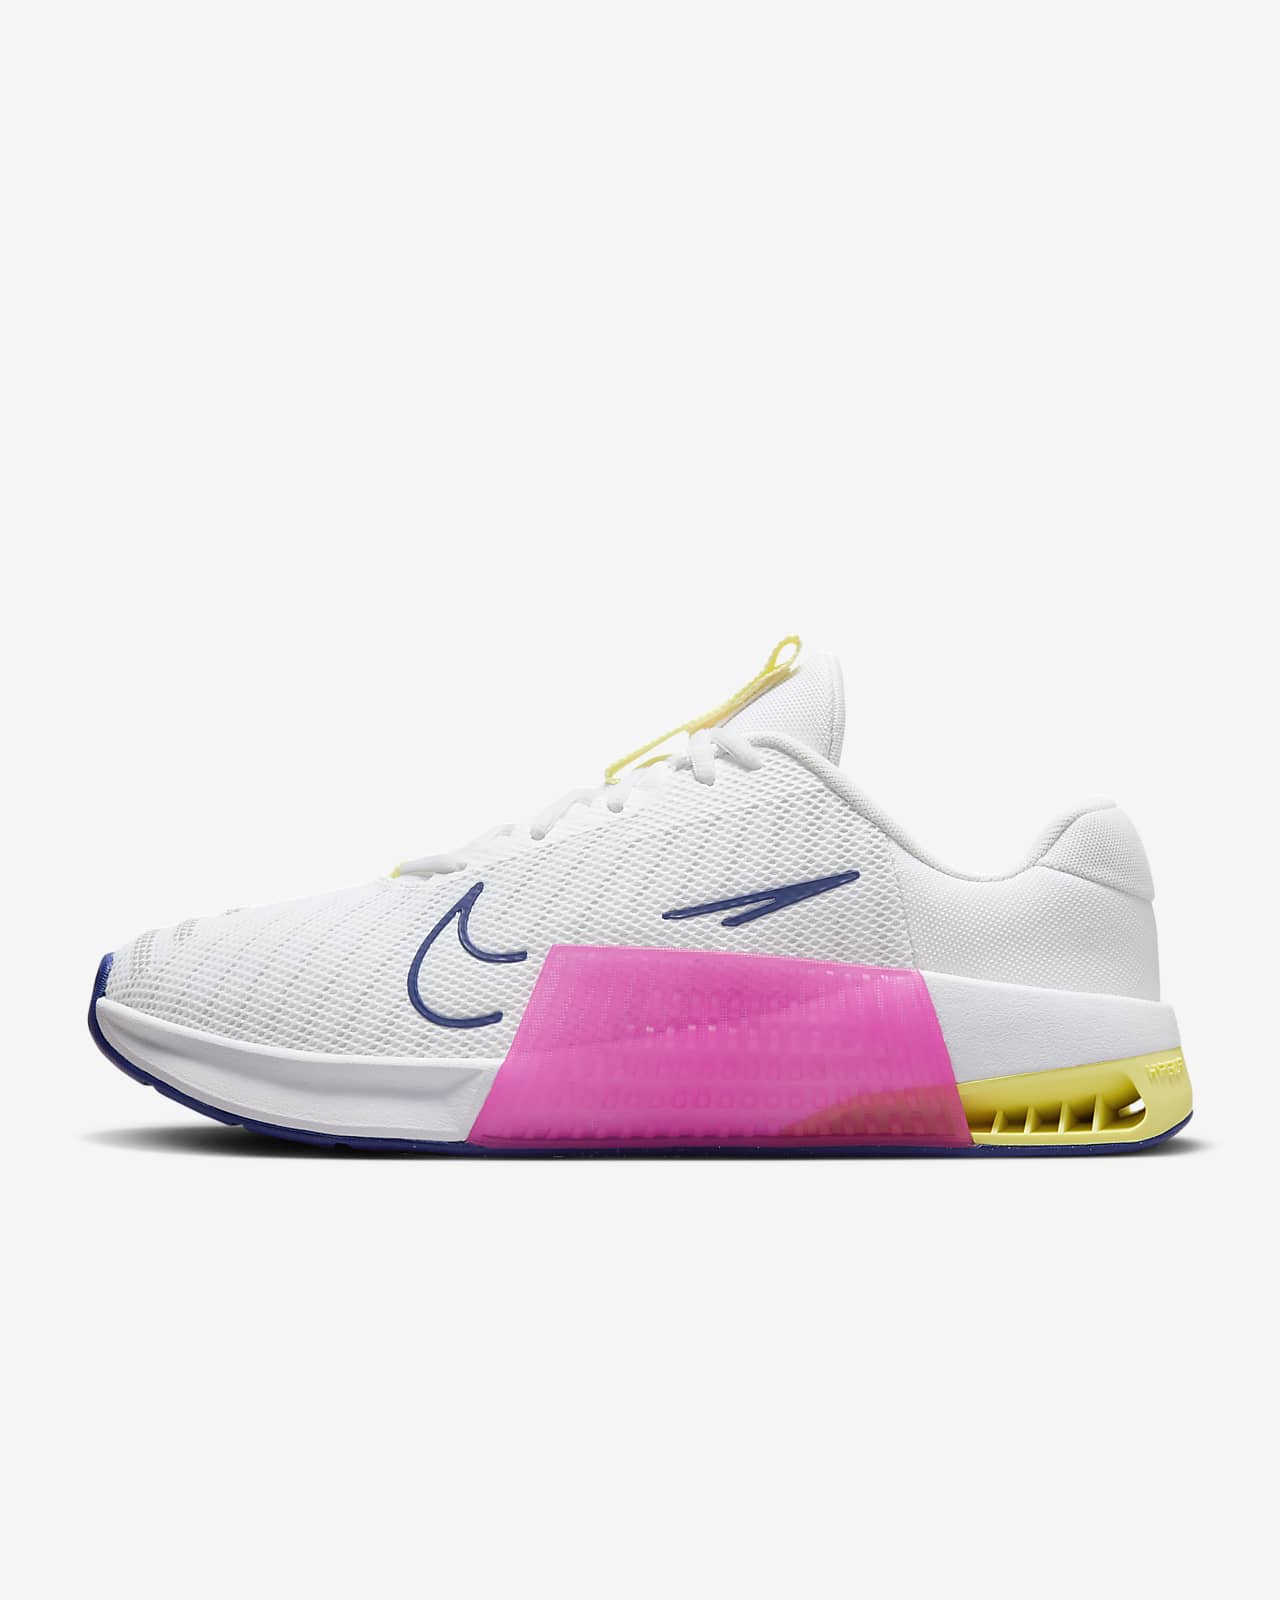 Nike Men's or Women's Metcon Workout Shoe (White/Deep Royal Blue/Fierce Pink/White) $67.48 + Free Shipping